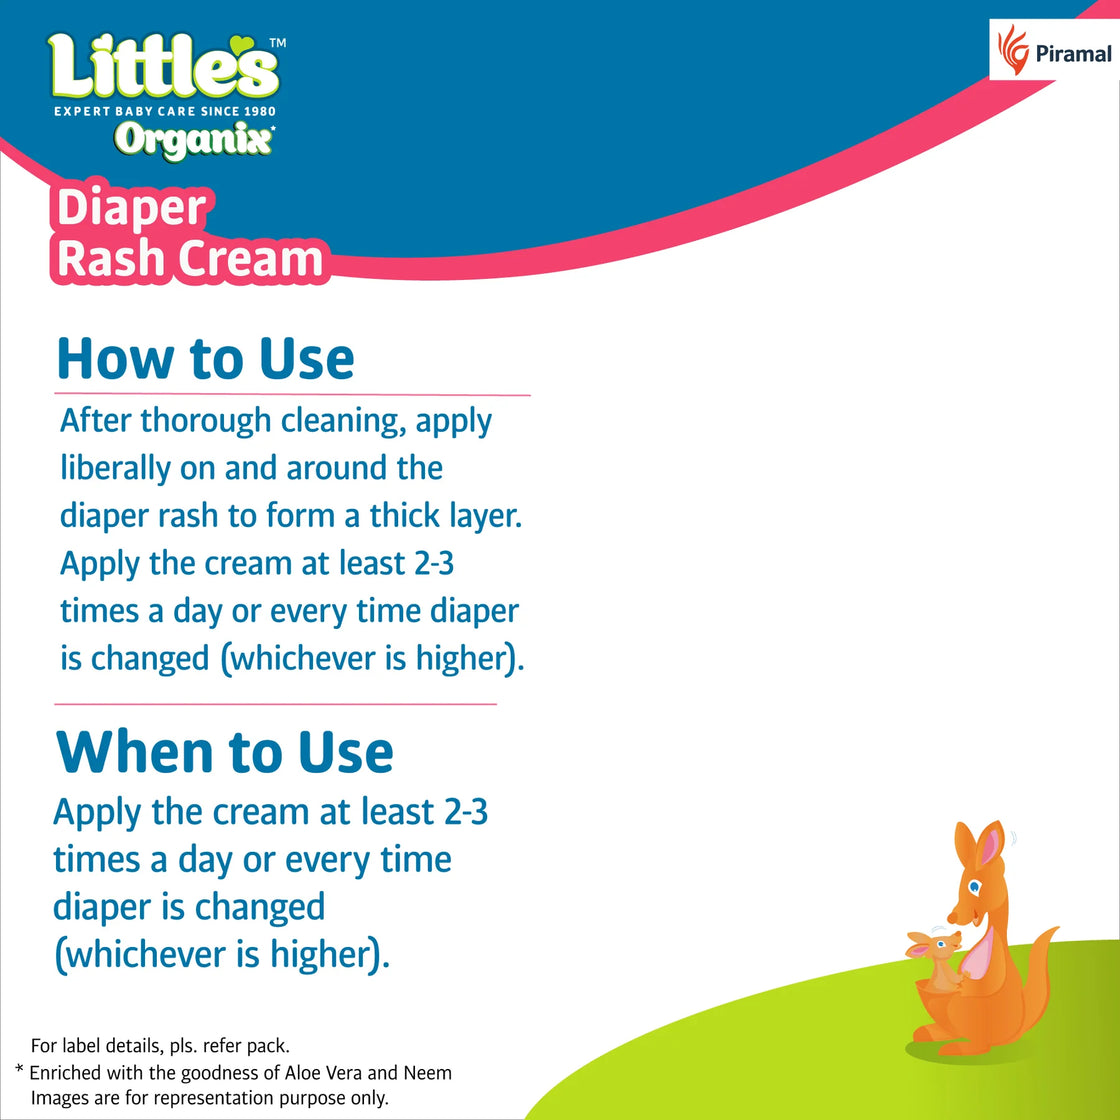 Little's Organix Diaper Rash Cream Contains Organic Aloevera & Neem Extract-50gm